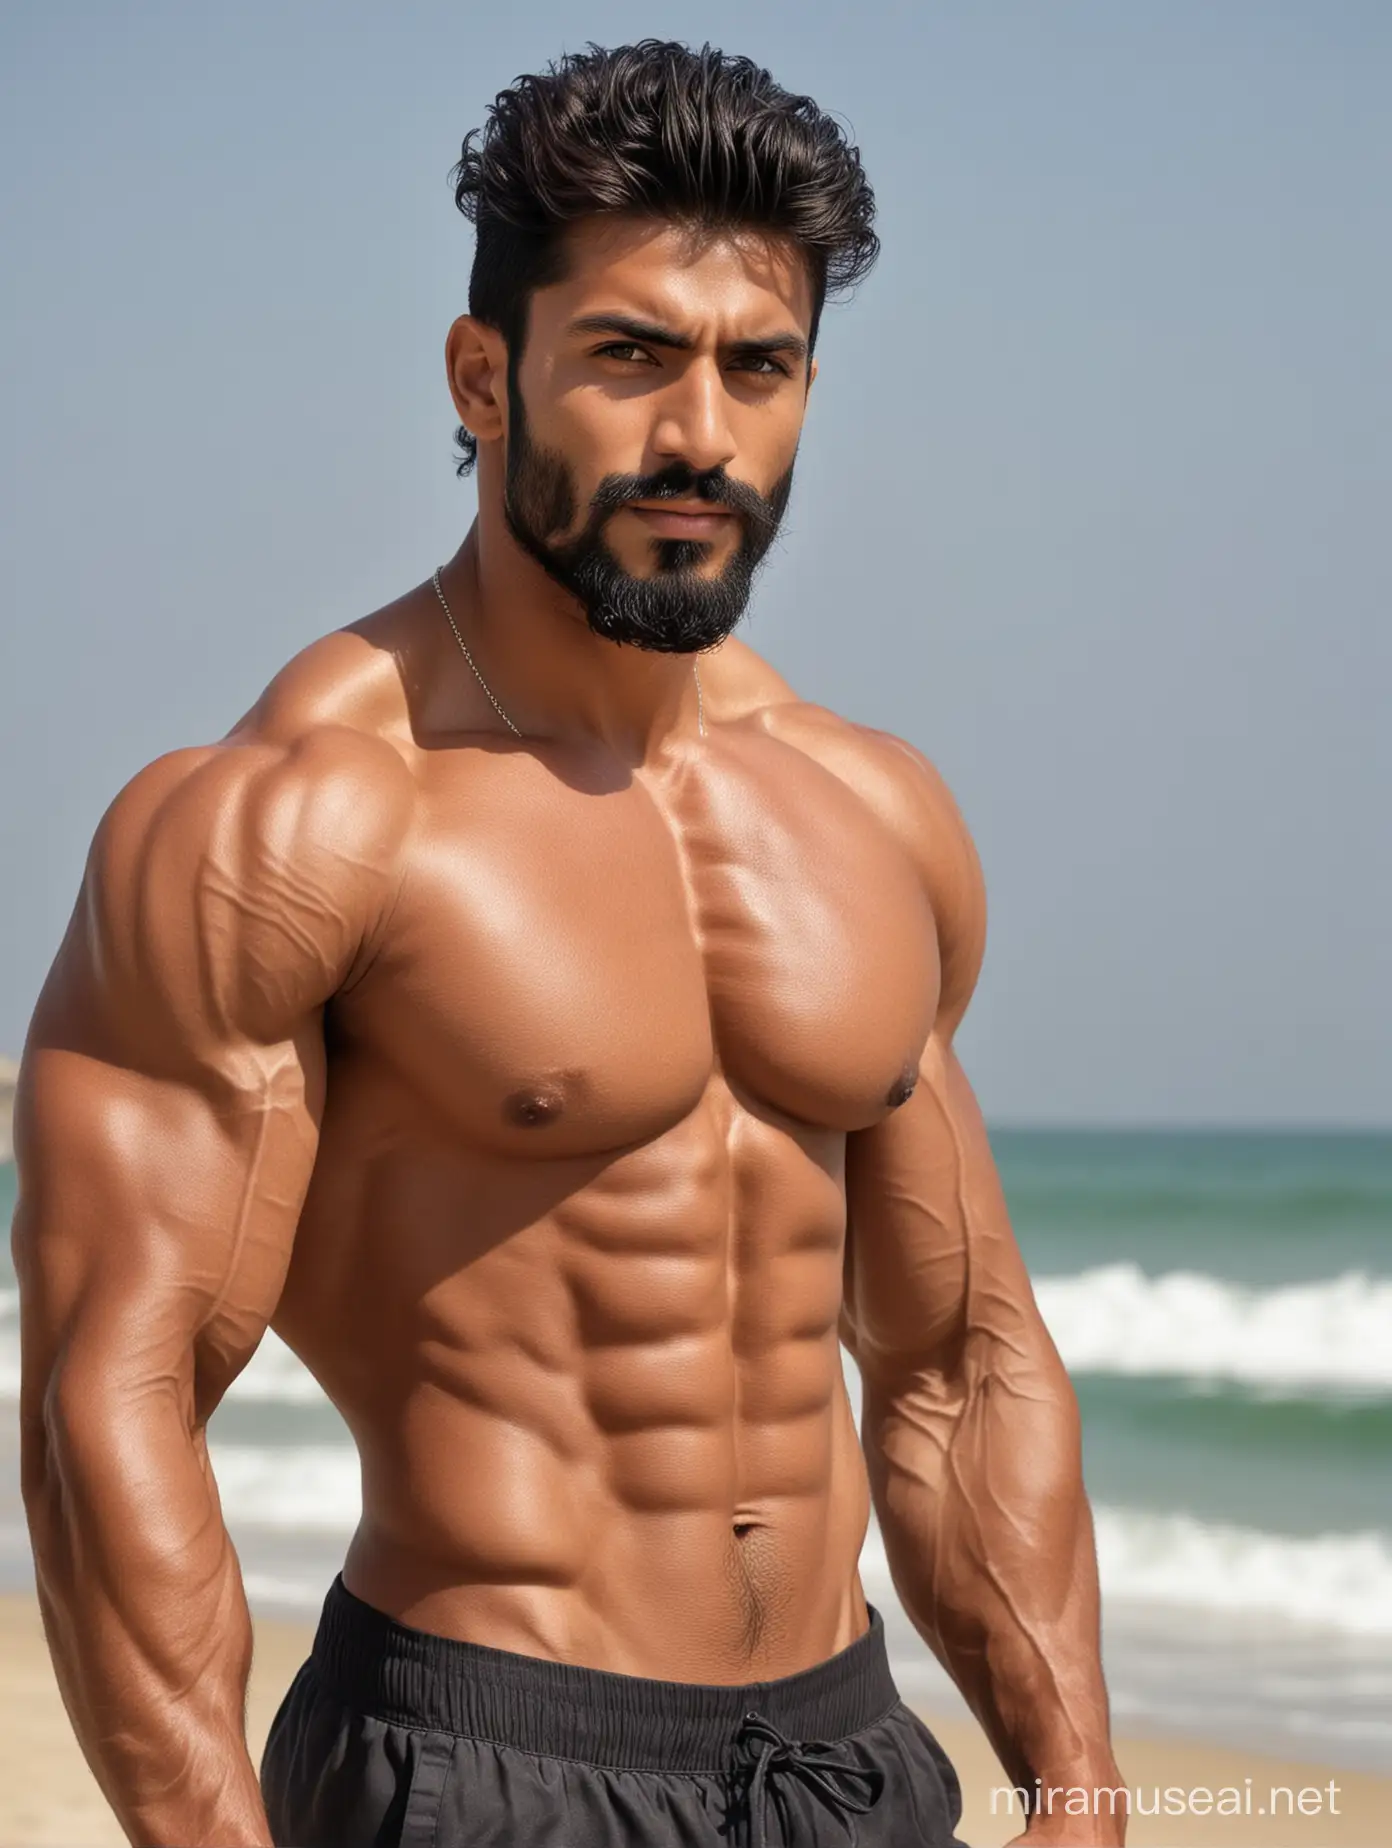 Handsome Pakistani Bodybuilder Showing Biceps on Beach